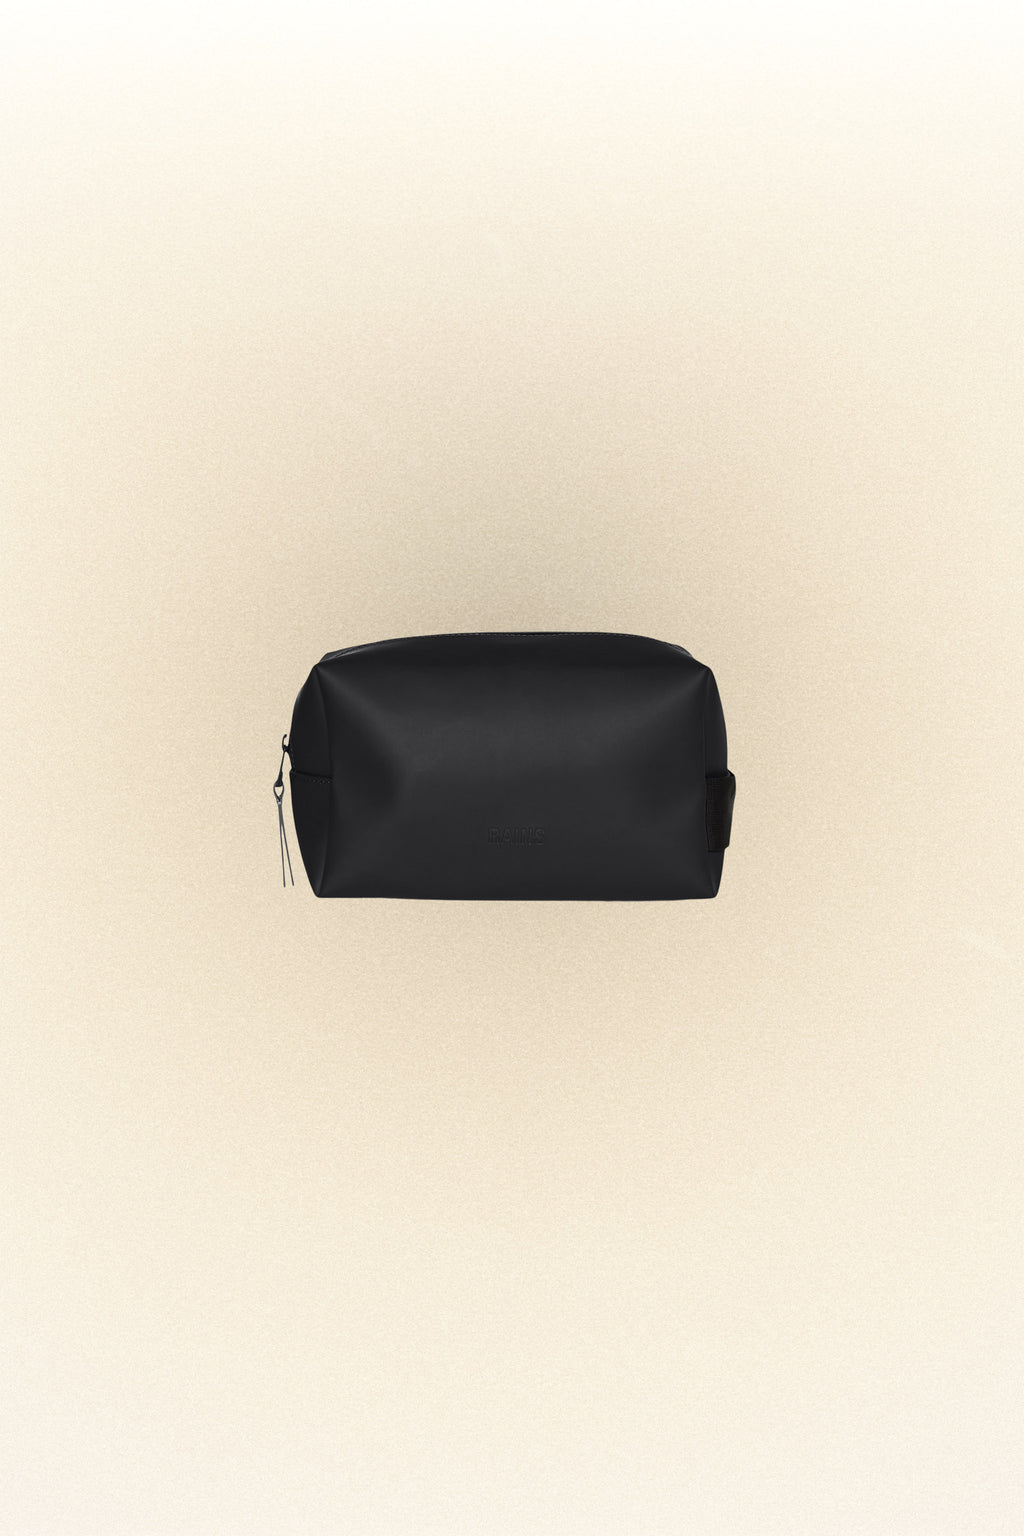 
                  
                    Neceser Wash Bag Small 15580 - Black
                  
                